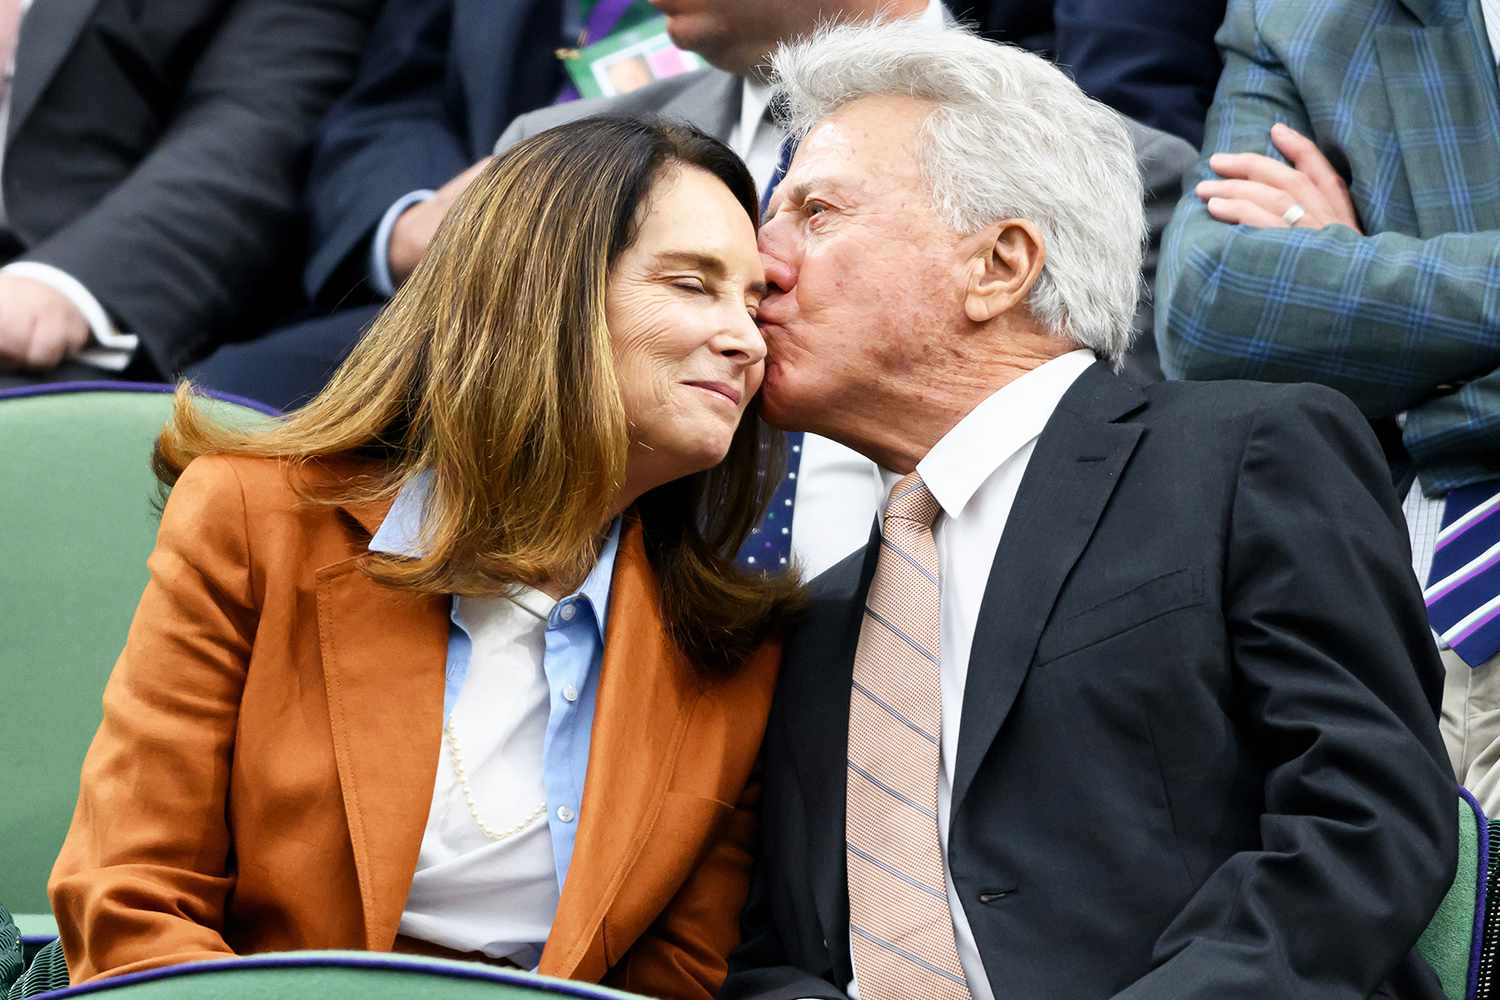 Dustin Hoffman Plants a Kiss on Longtime Wife Lisa at Wimbledon: See the Sweet Photos